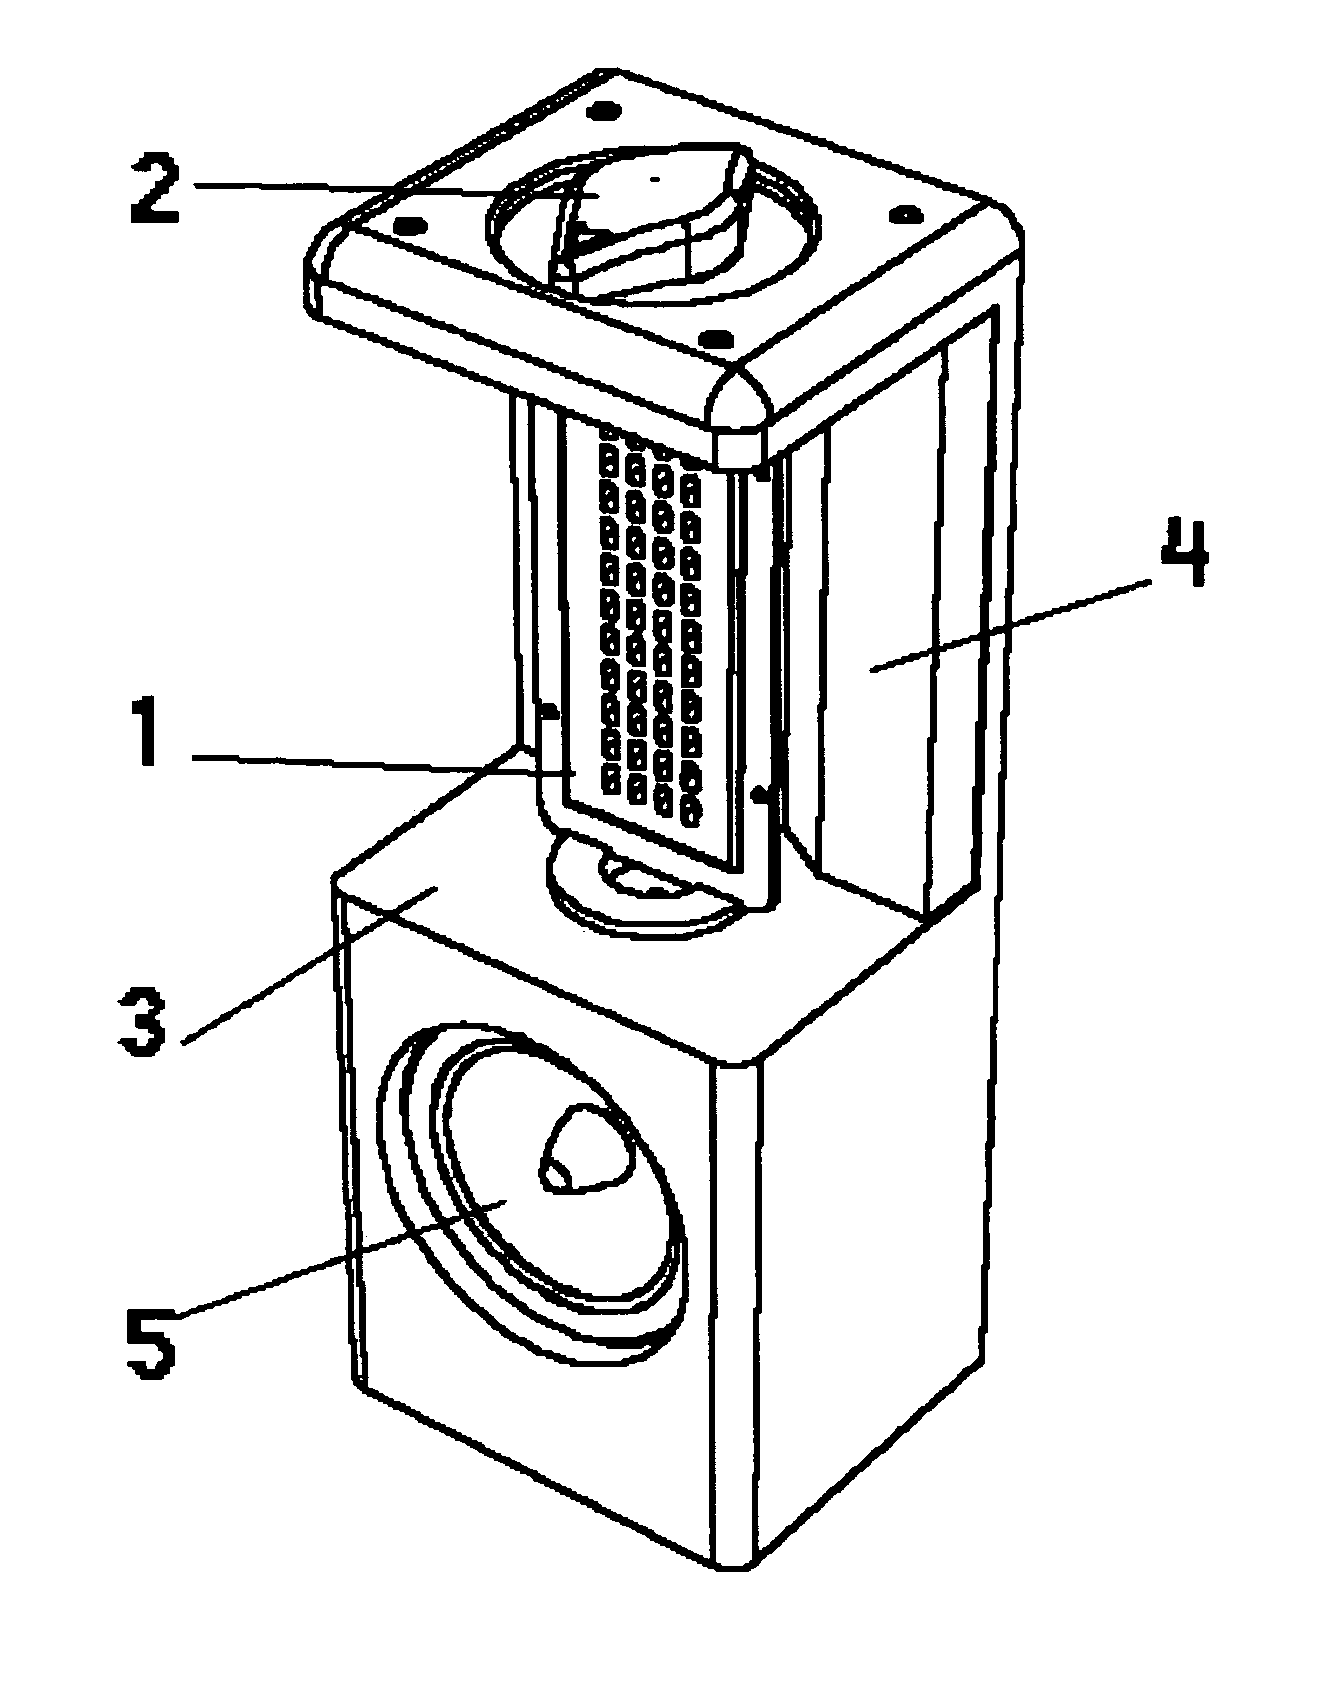 Loudspeaker with variable radiation pattern